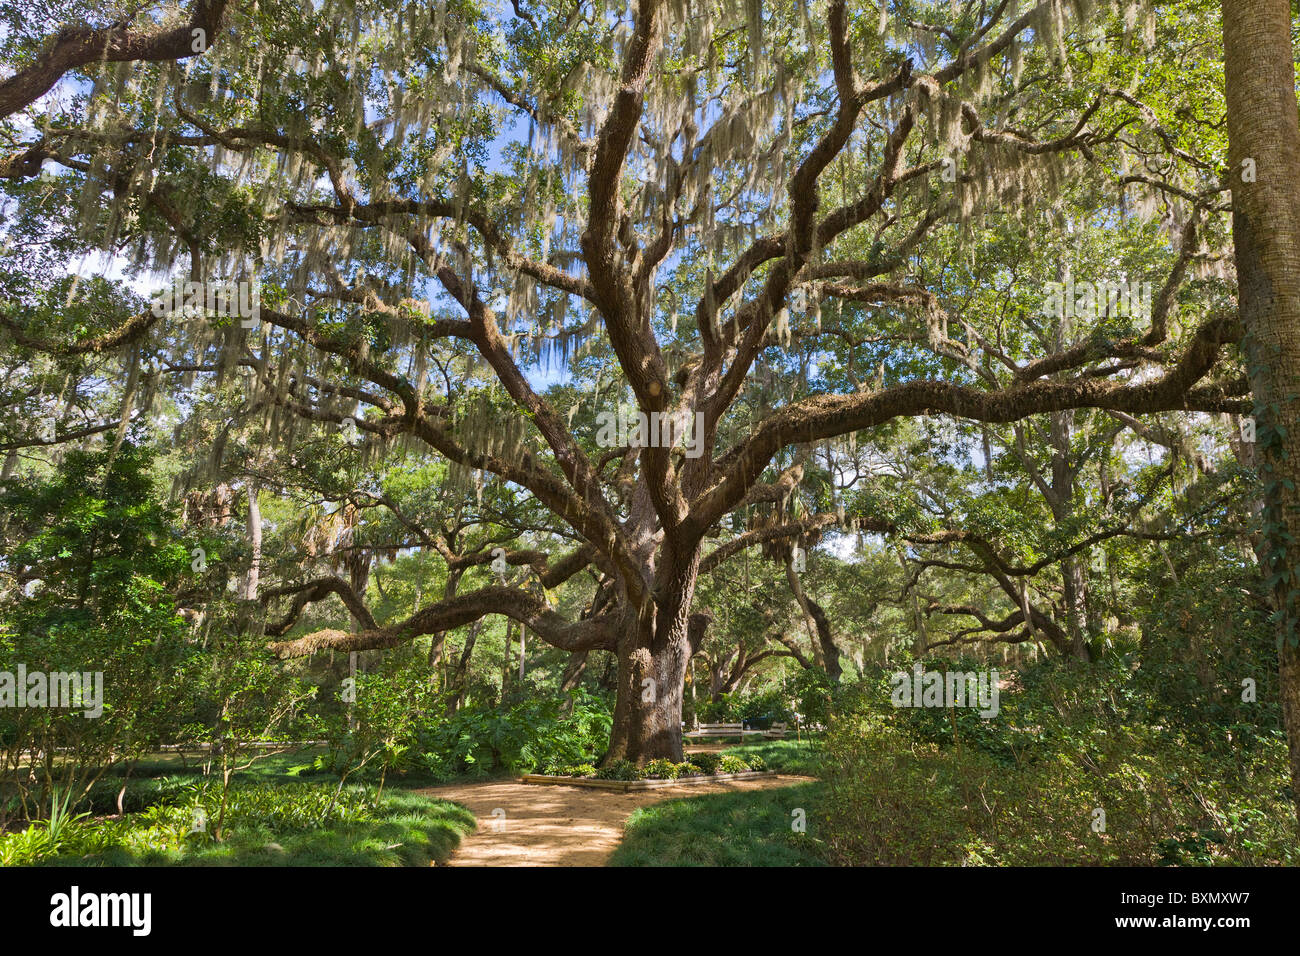 Large Live Oak Tree In Washington Oaks Gardens State Park On The